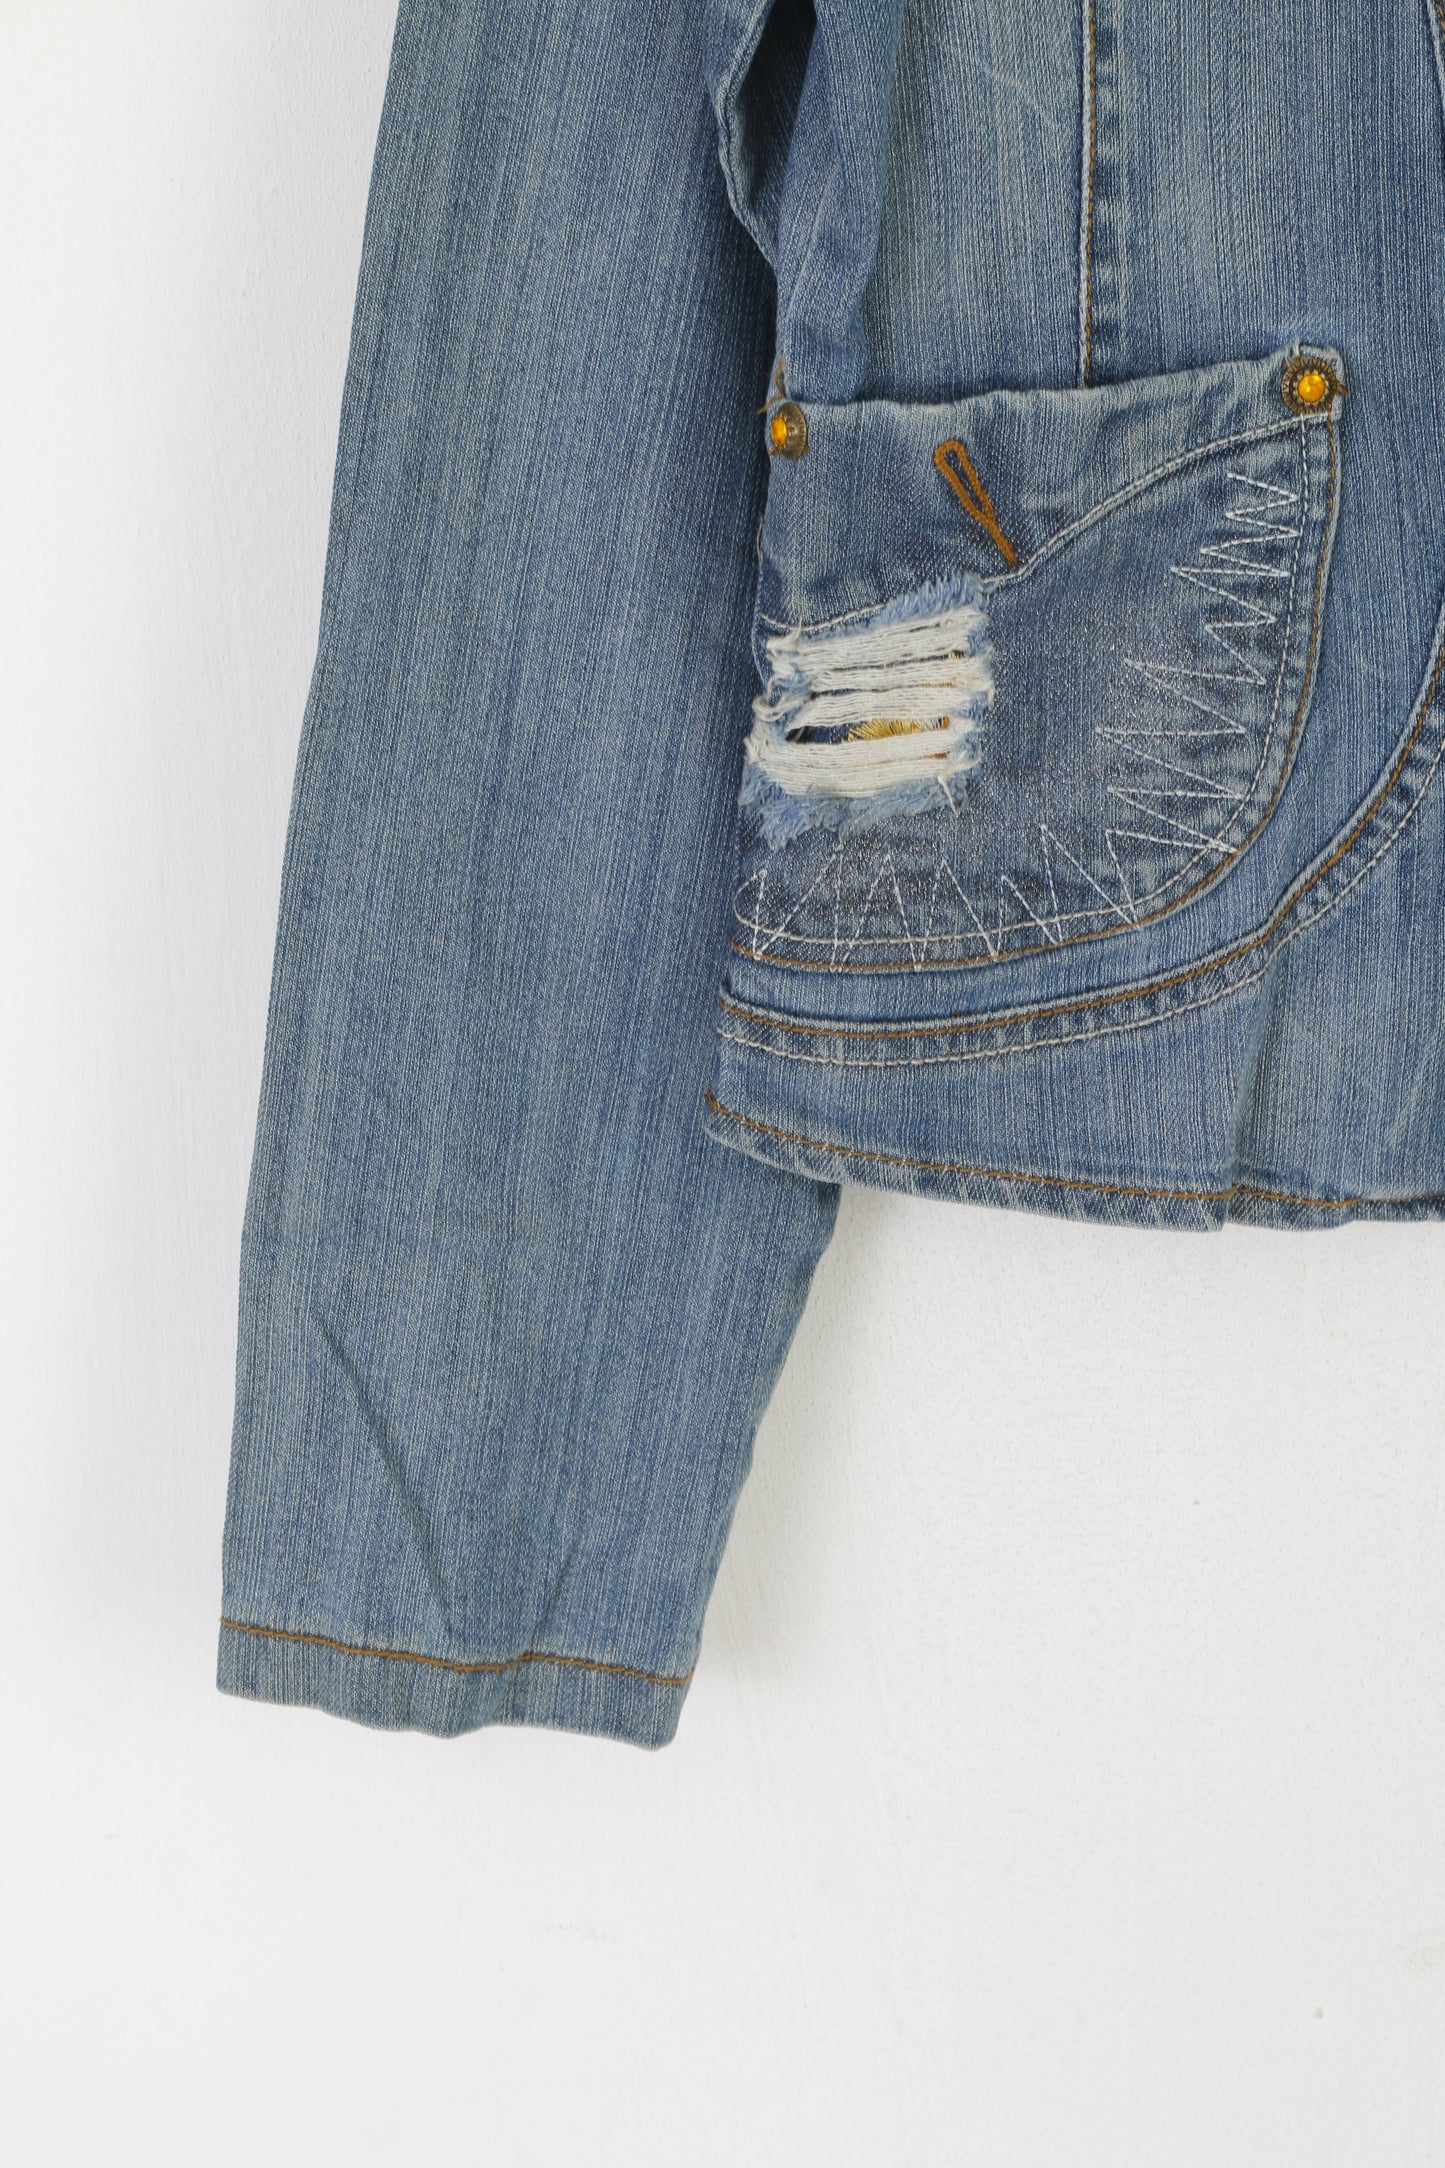 Vegoo Giacca da donna XL (M) Jeans blu vintage glitterati Blazer con bottoni dorati